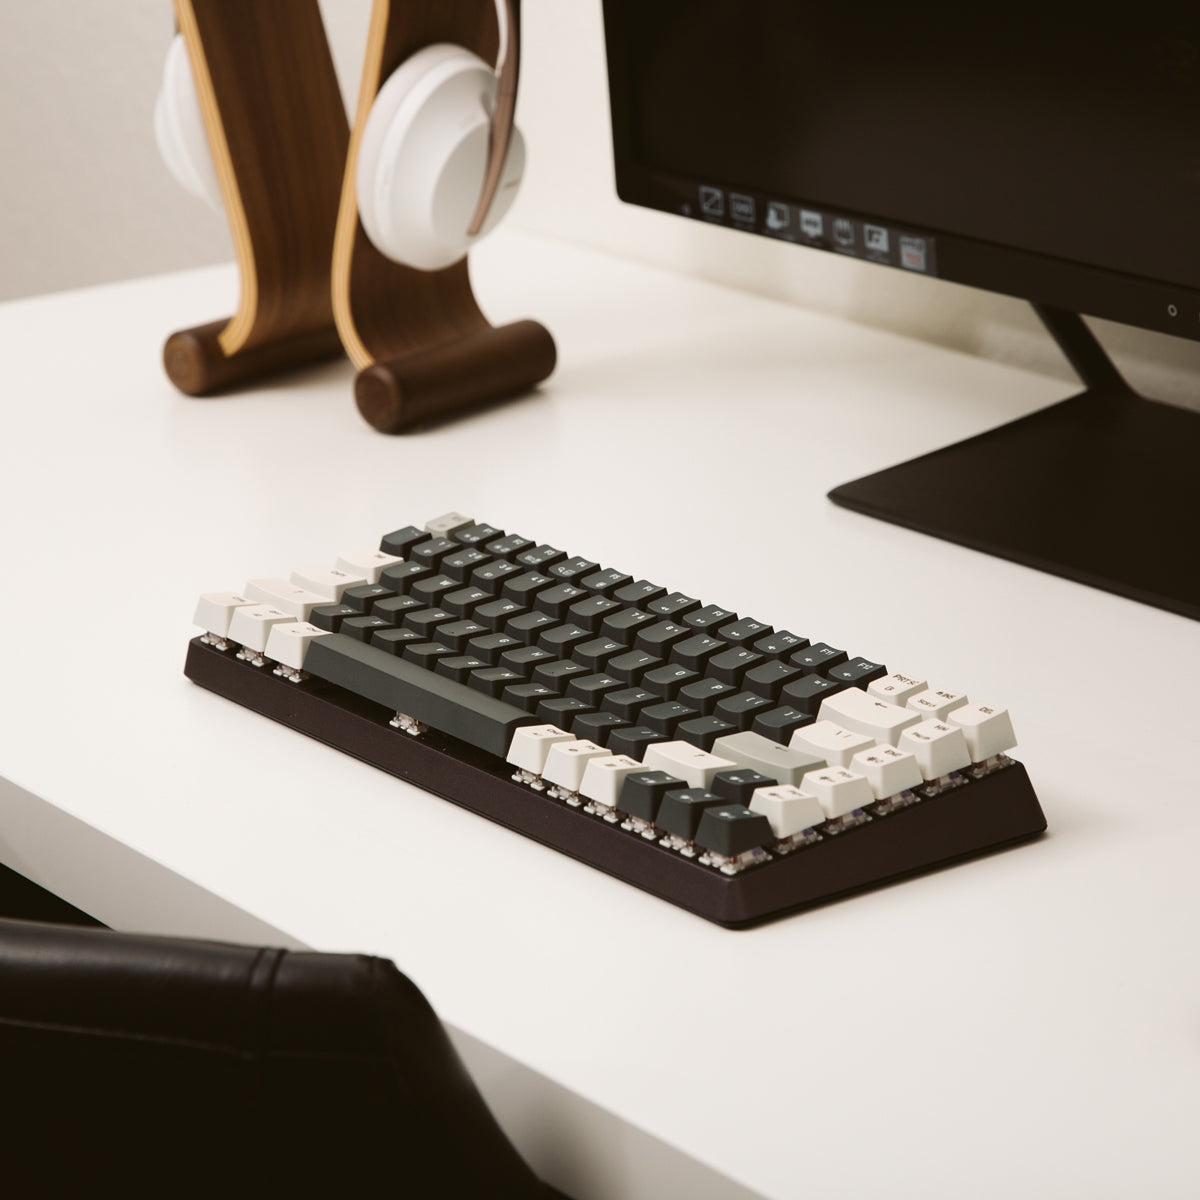 Cascade 75% Wireless Hot-Swappable Keyboard